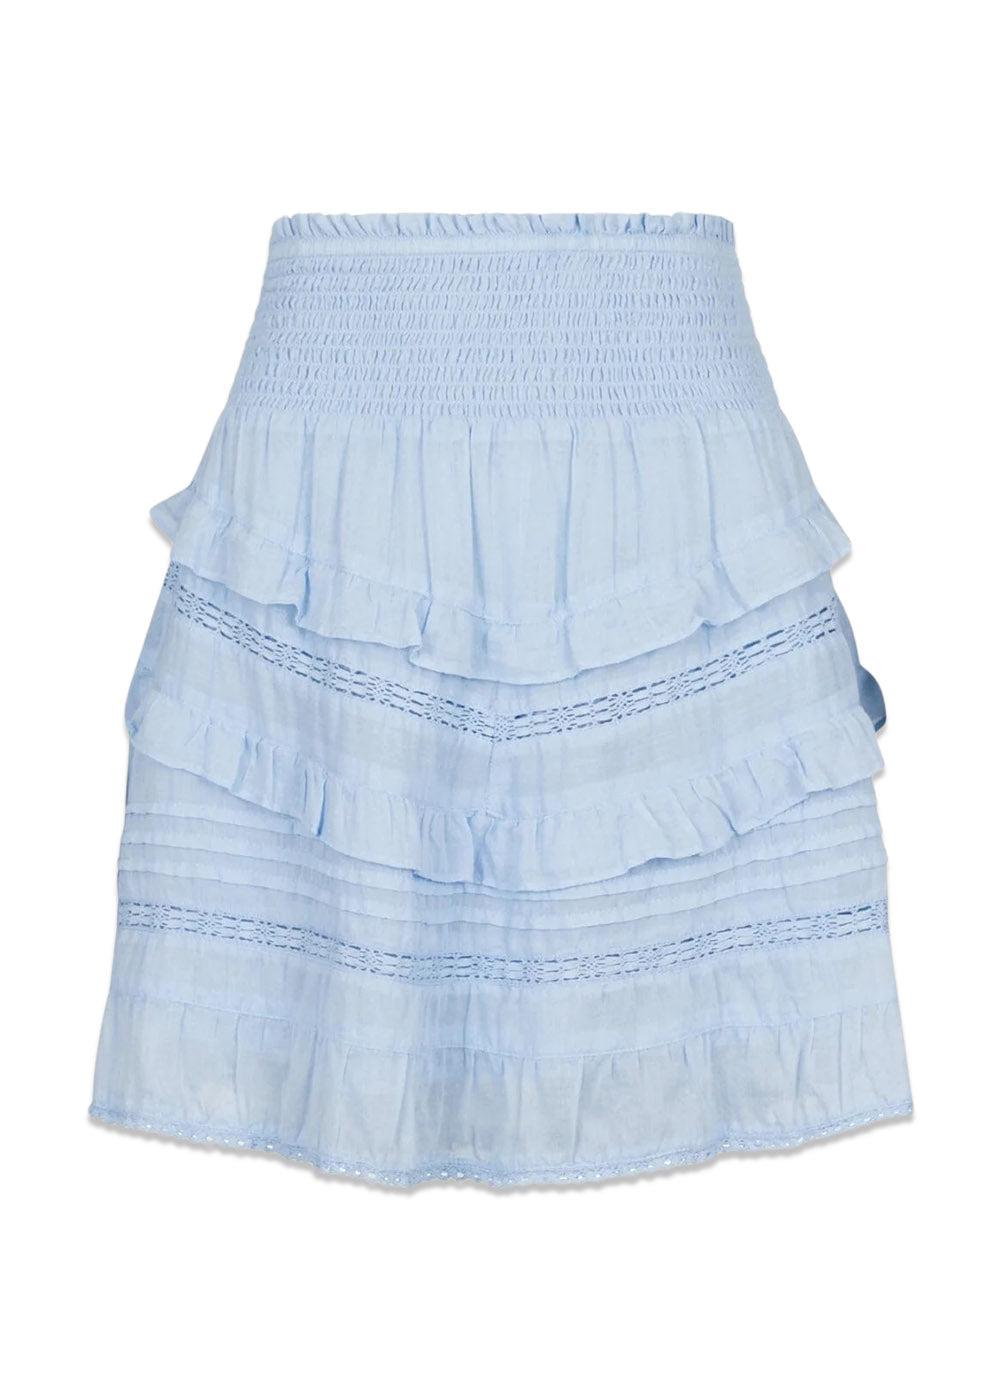 Neo Noirs Donna S Voile Skirt - Light Blue. Køb skirts her.